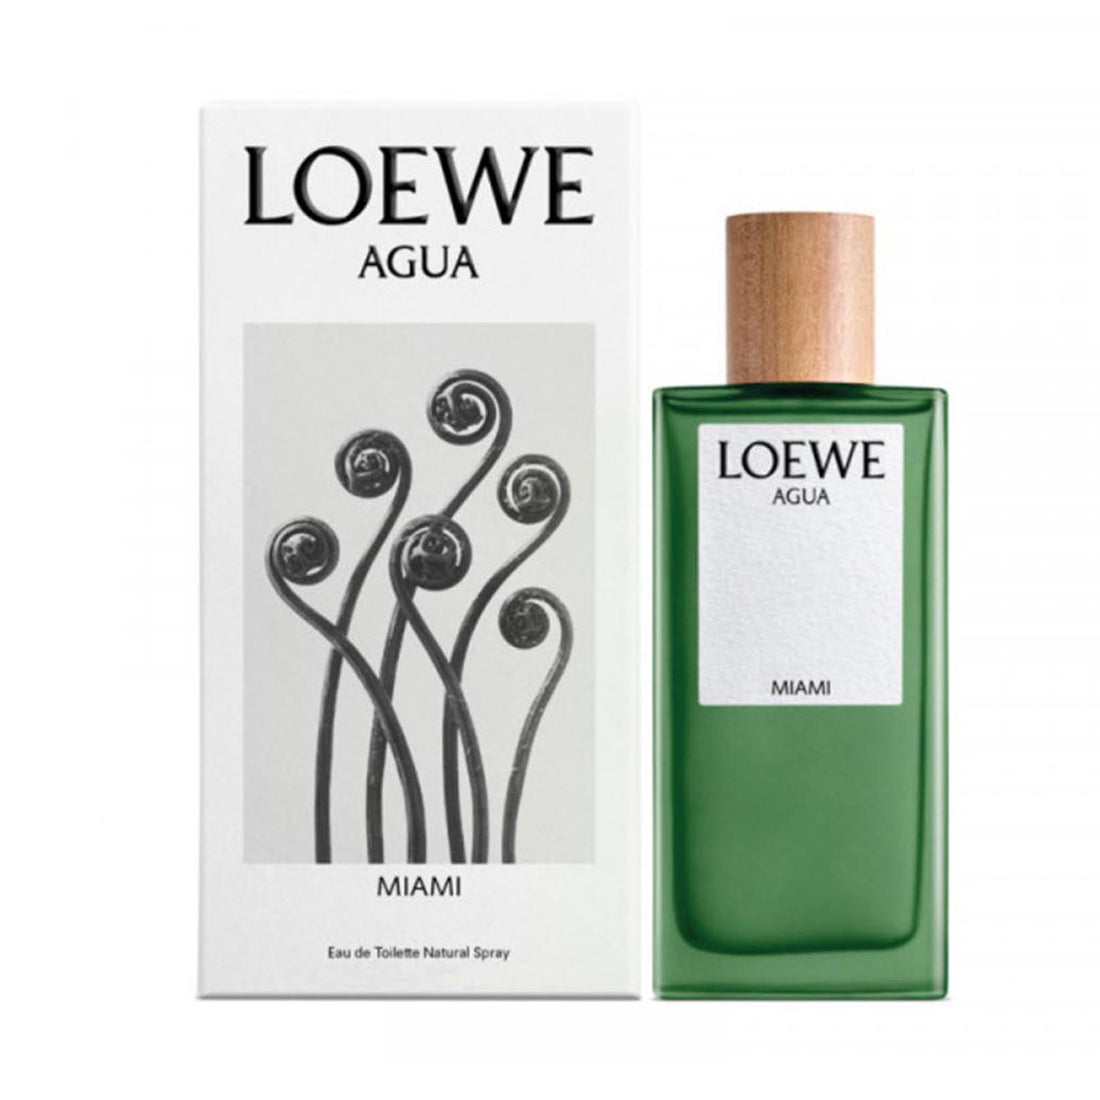 Loewe Agua Miami Eau De Toilette 150ml Vaporisateur